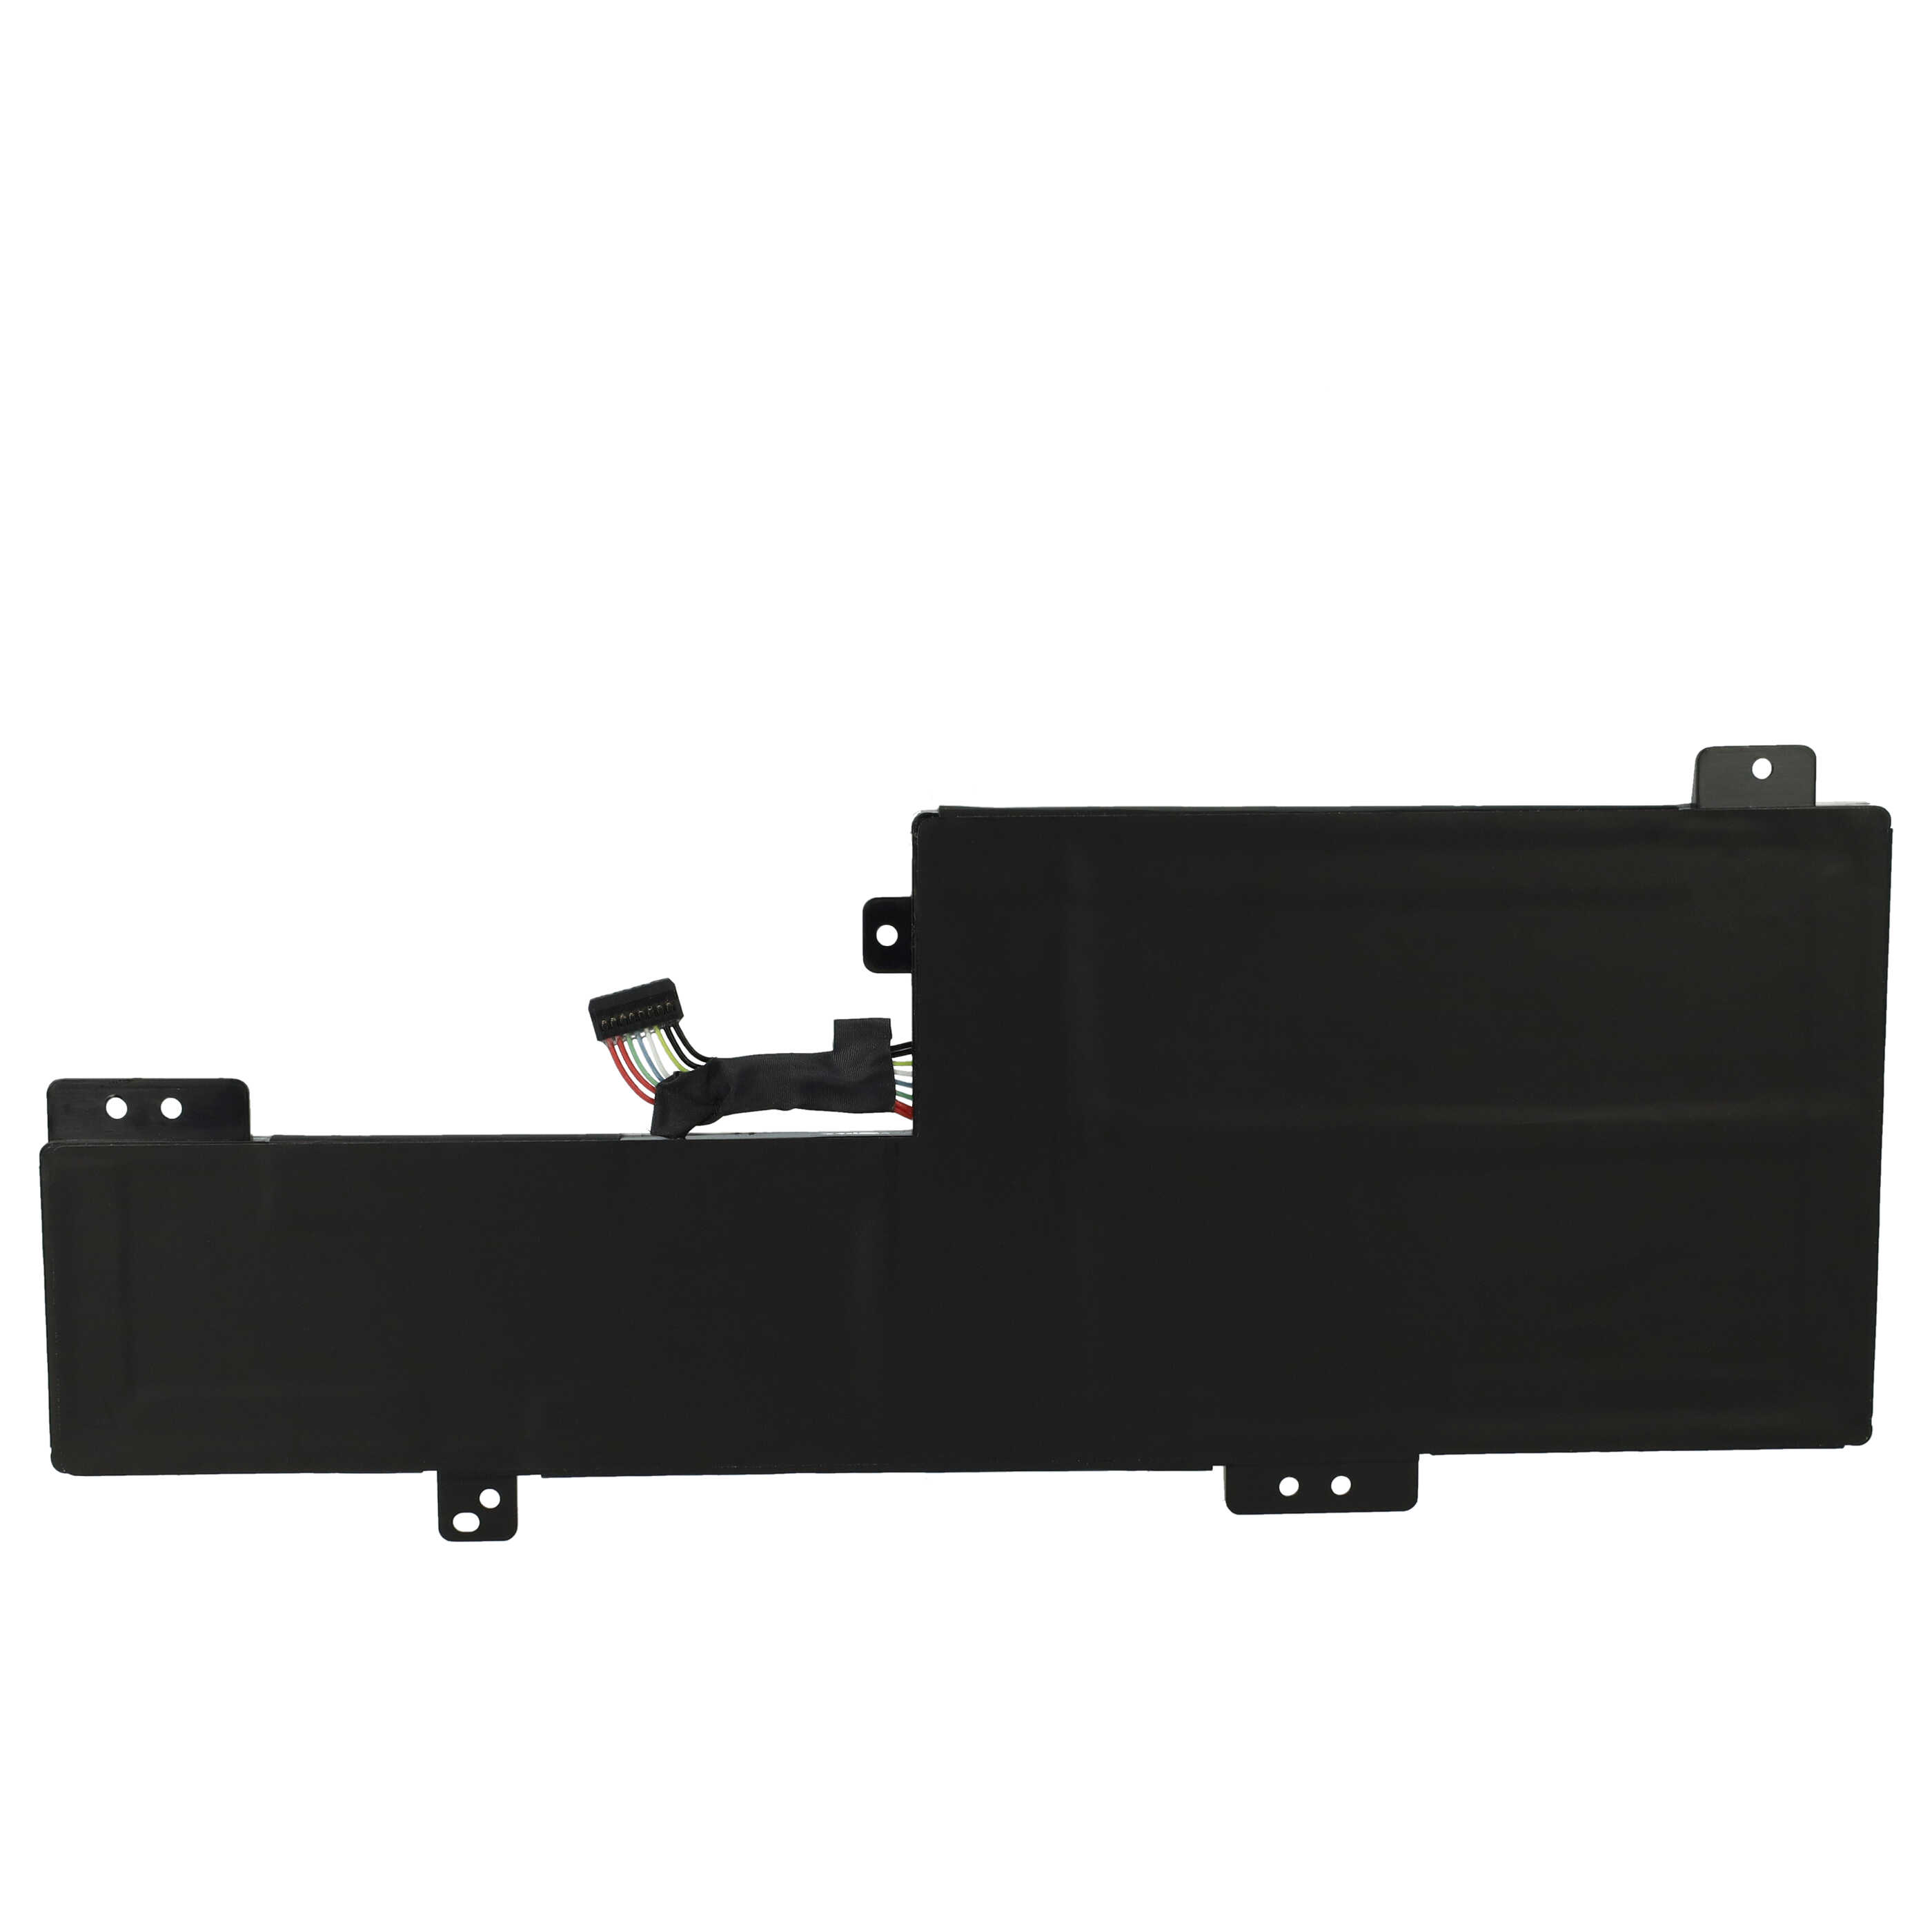 Akumulator do laptopa zamiennik Lenovo 5B10X02593, 5B10X02604, L19C3PF8, L19M3PF8 - 3150 mAh 11,52 V LiPo